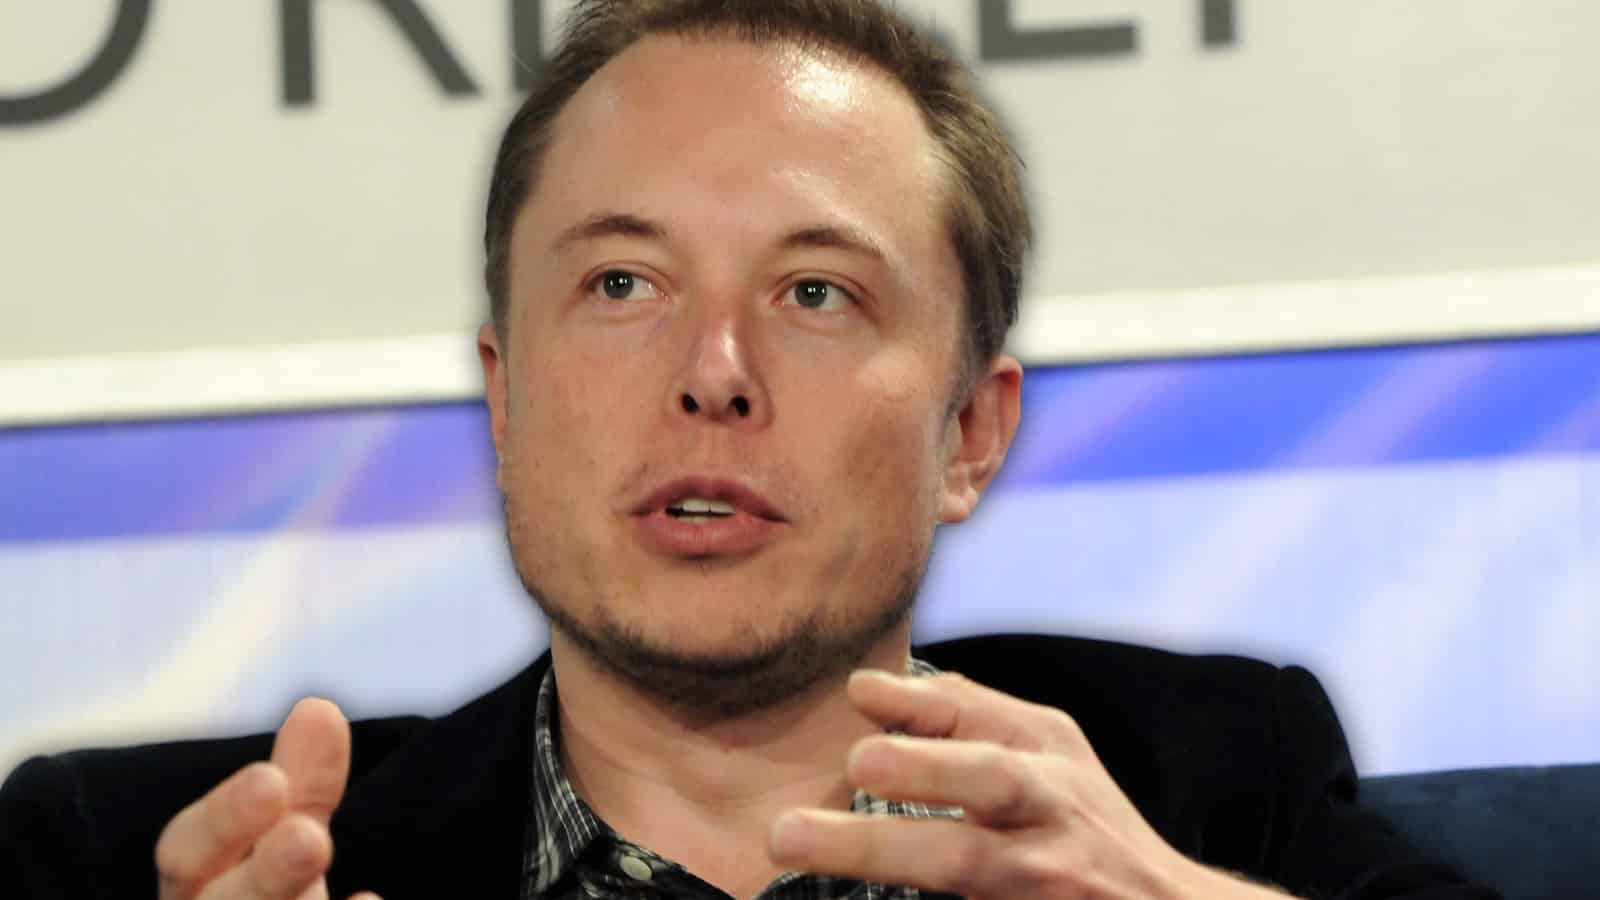 Elon Musk urged to buy YouTube after tweet